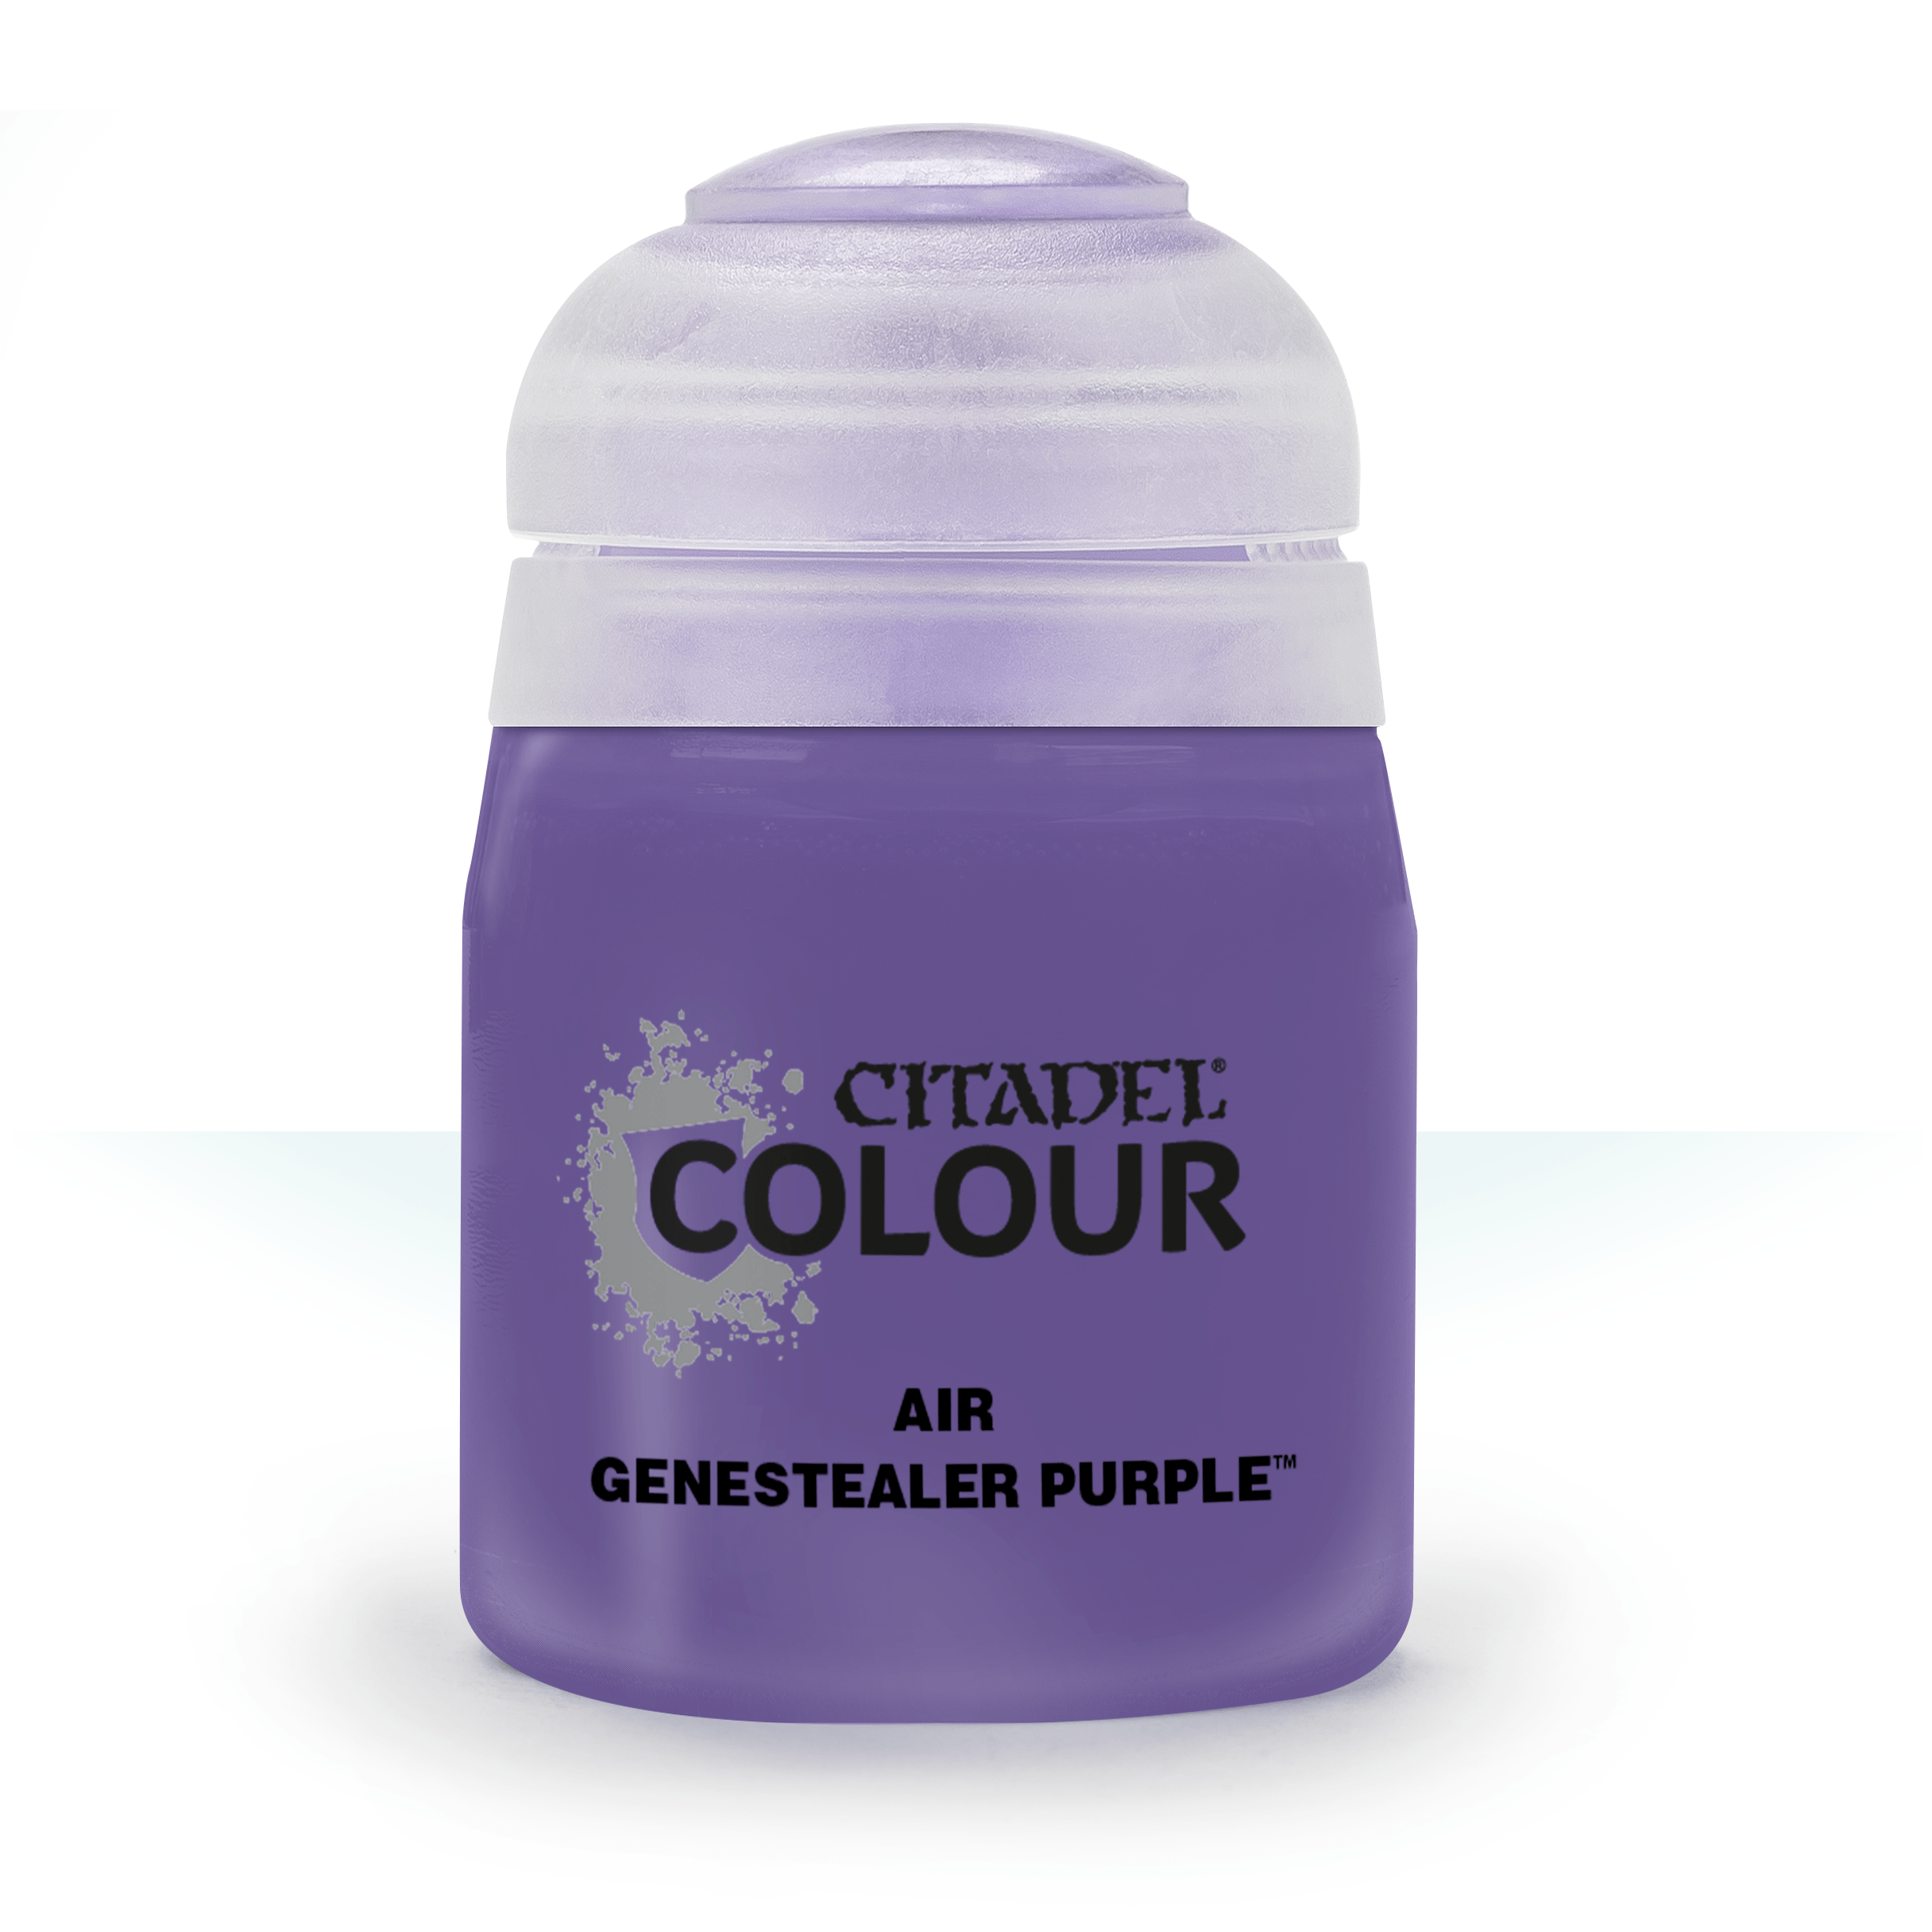 Citadel Air Genestealer Purple